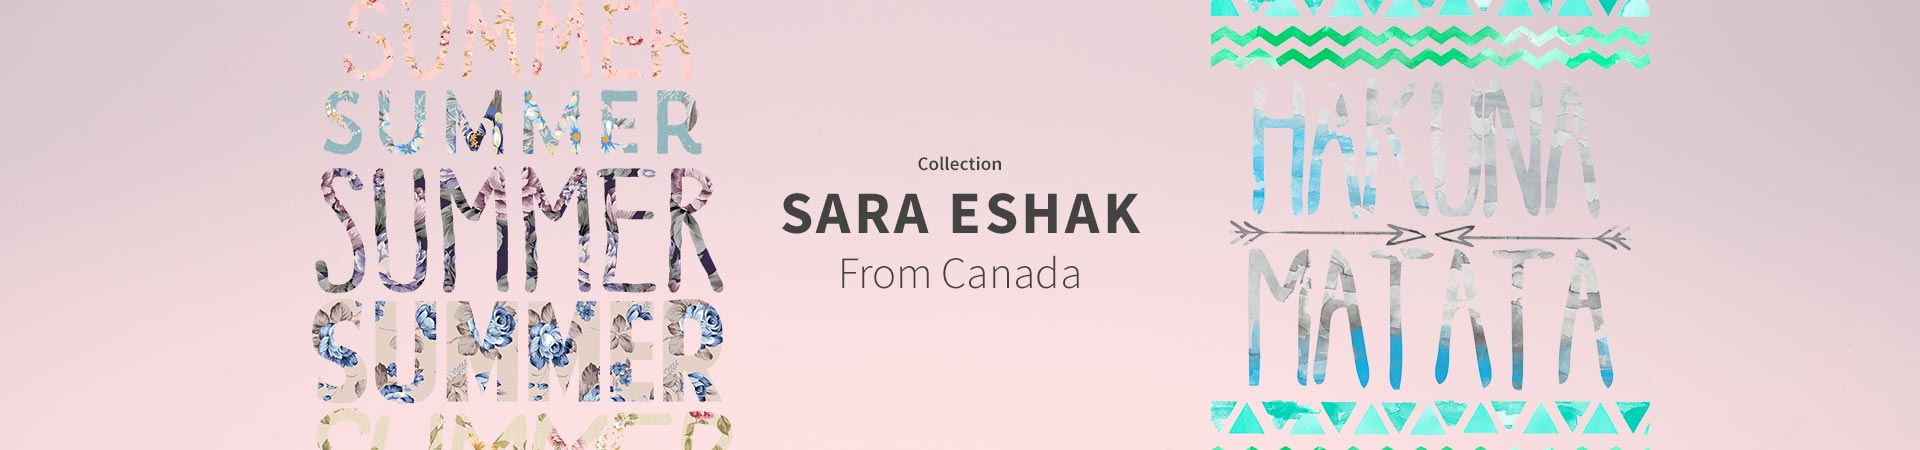 Collection Sara Eshak